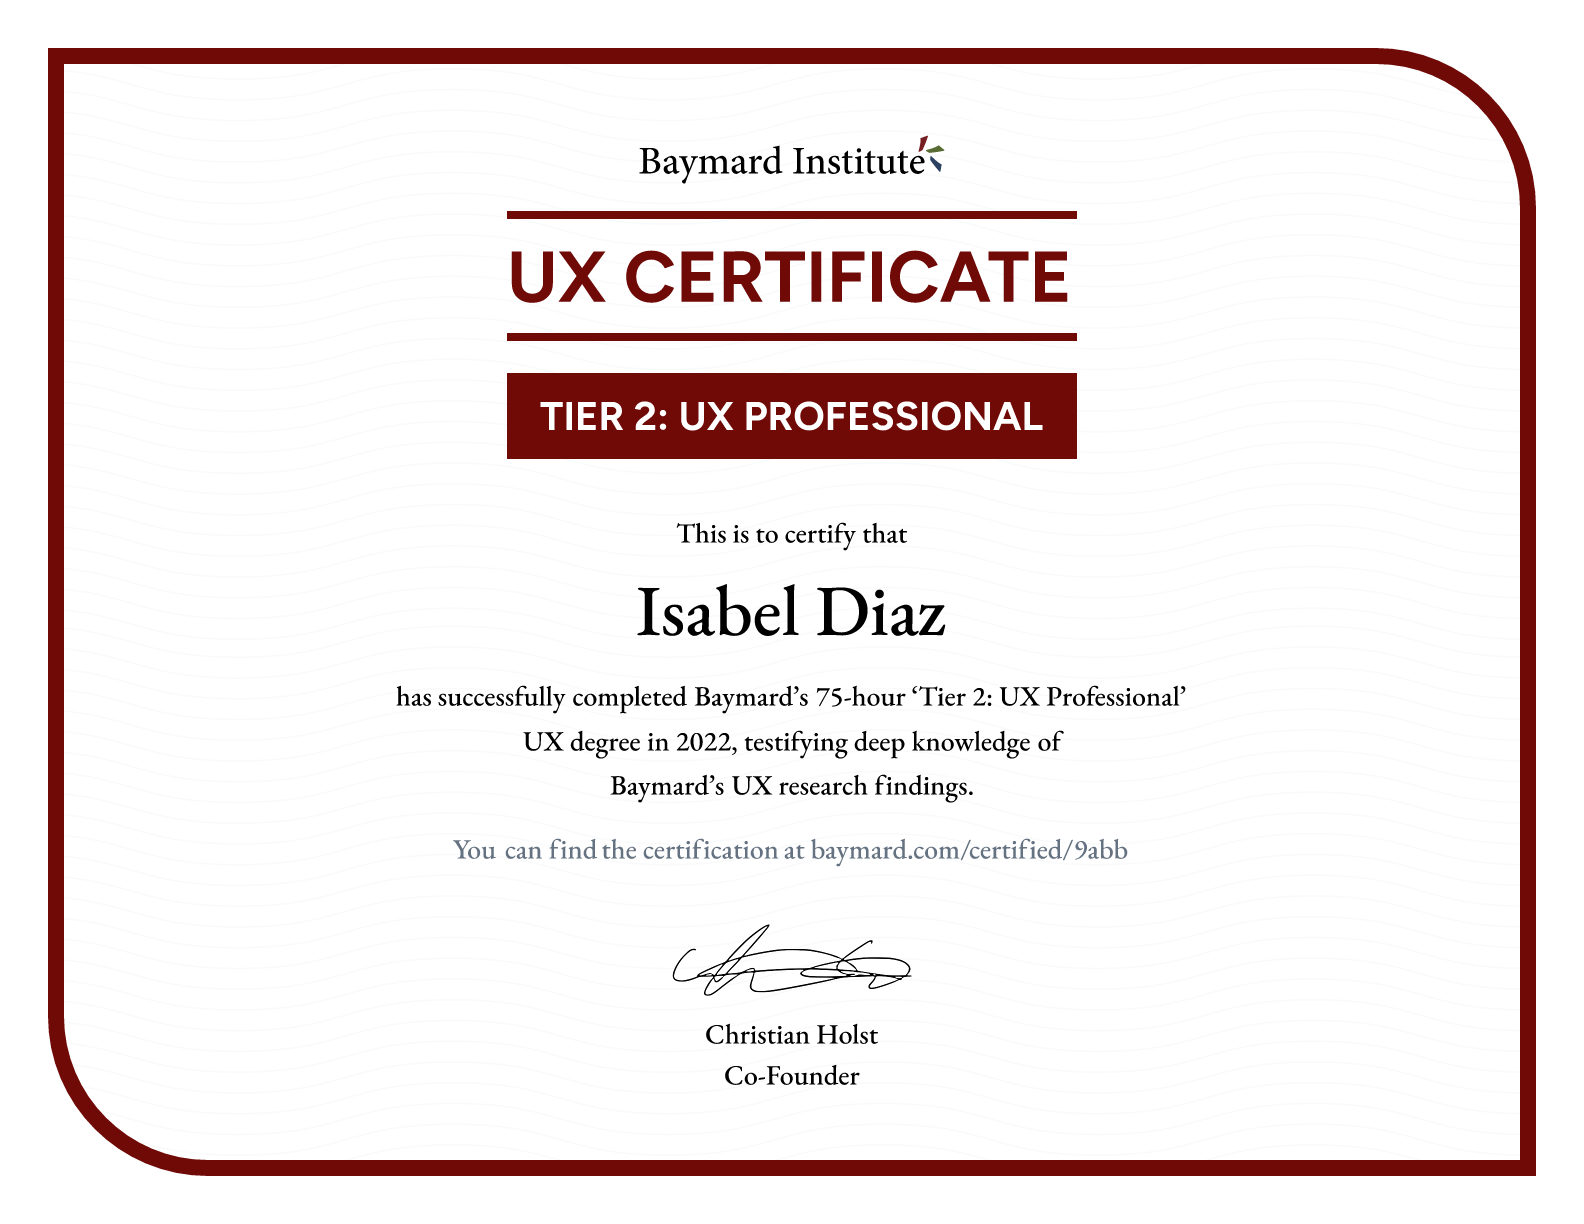 Isabel Diaz’s certificate